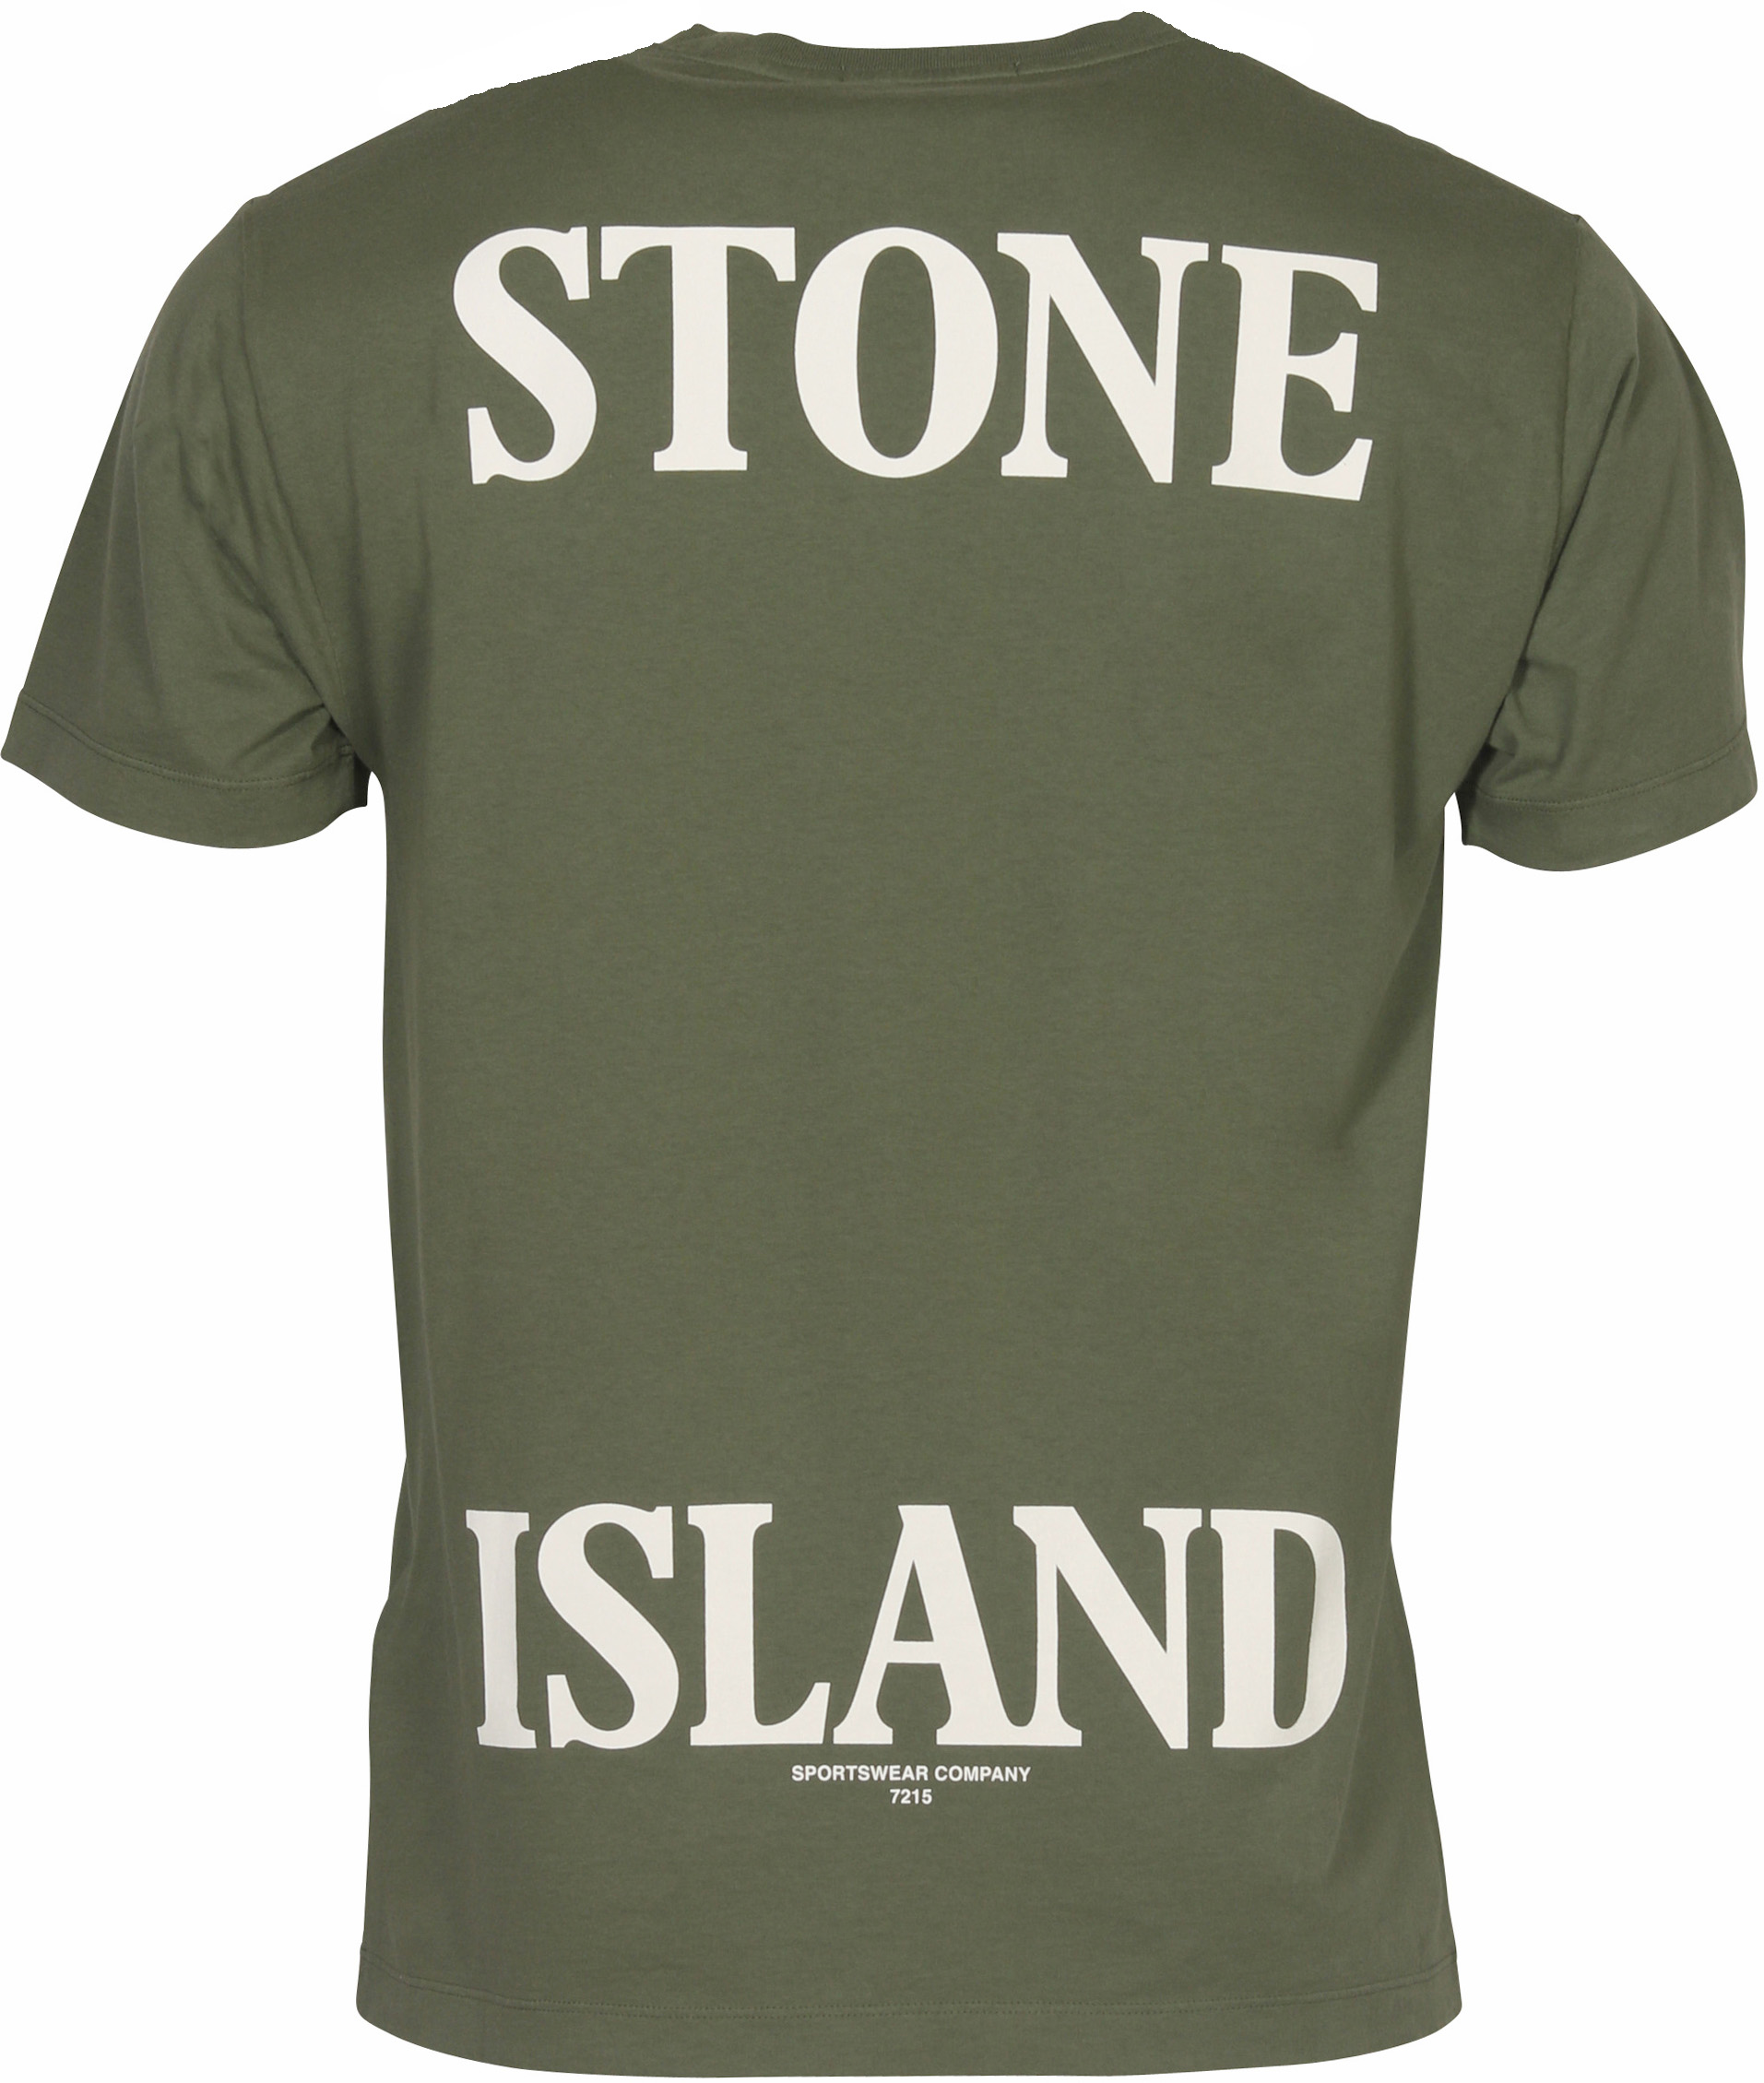 Stone Island T-Shirt Olive Stitched XXL